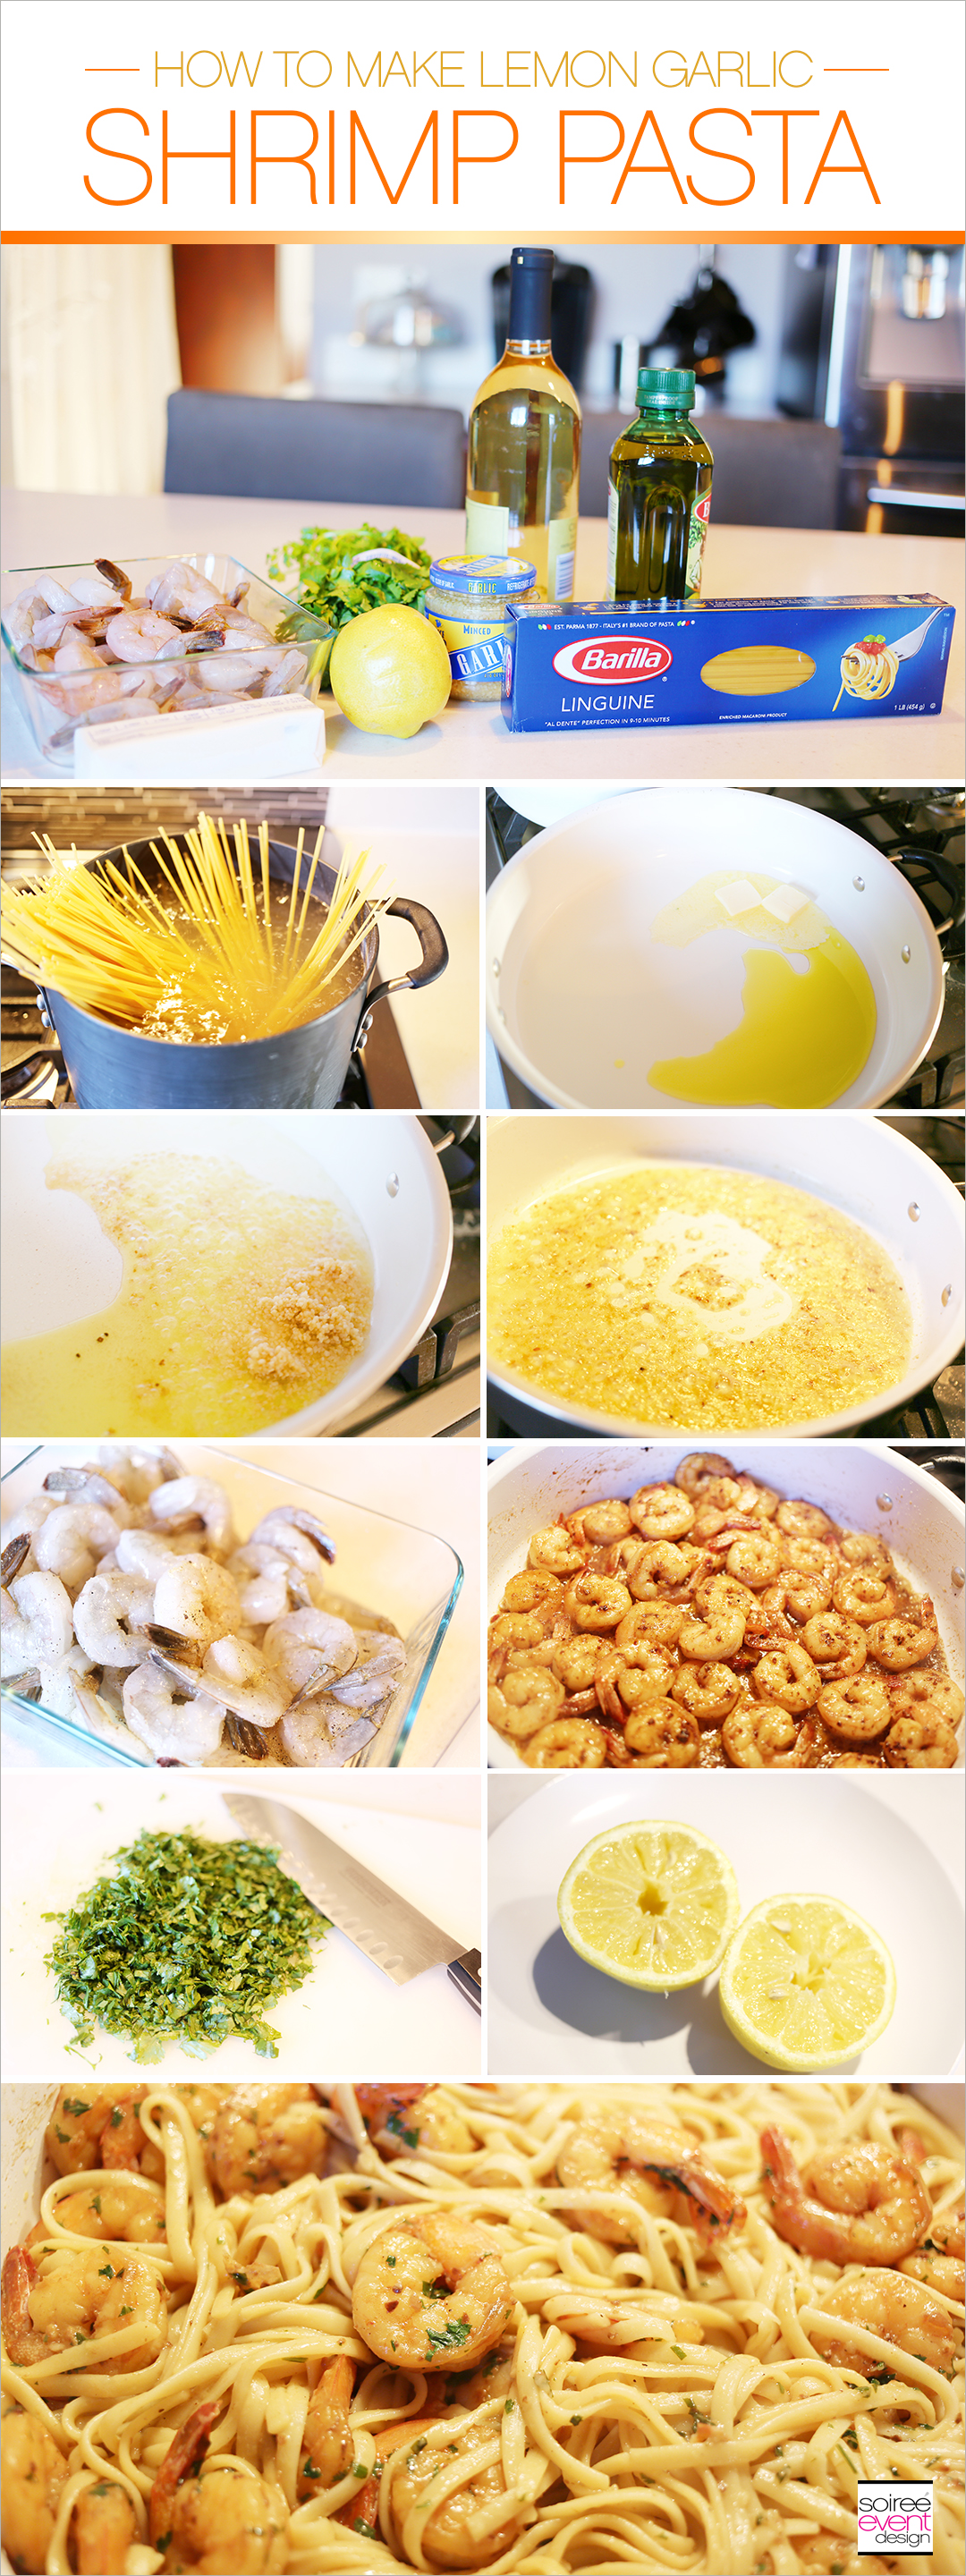 How to Make Lemon Garlic Shrimp Pasta